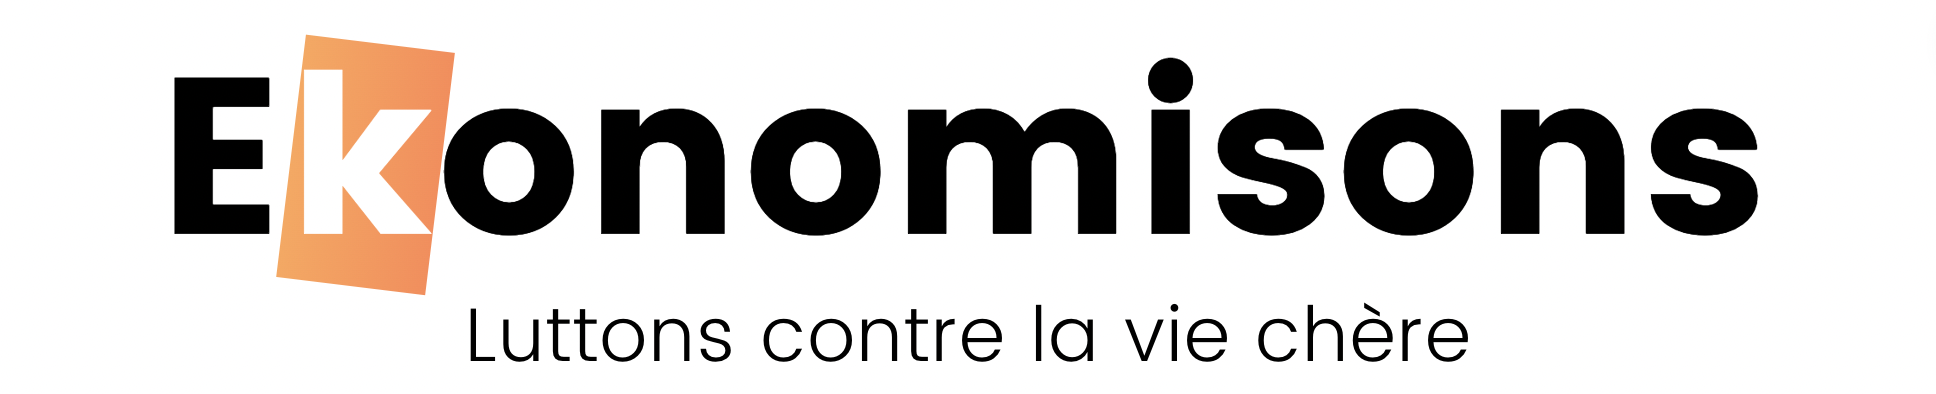 logo-ekonomisons